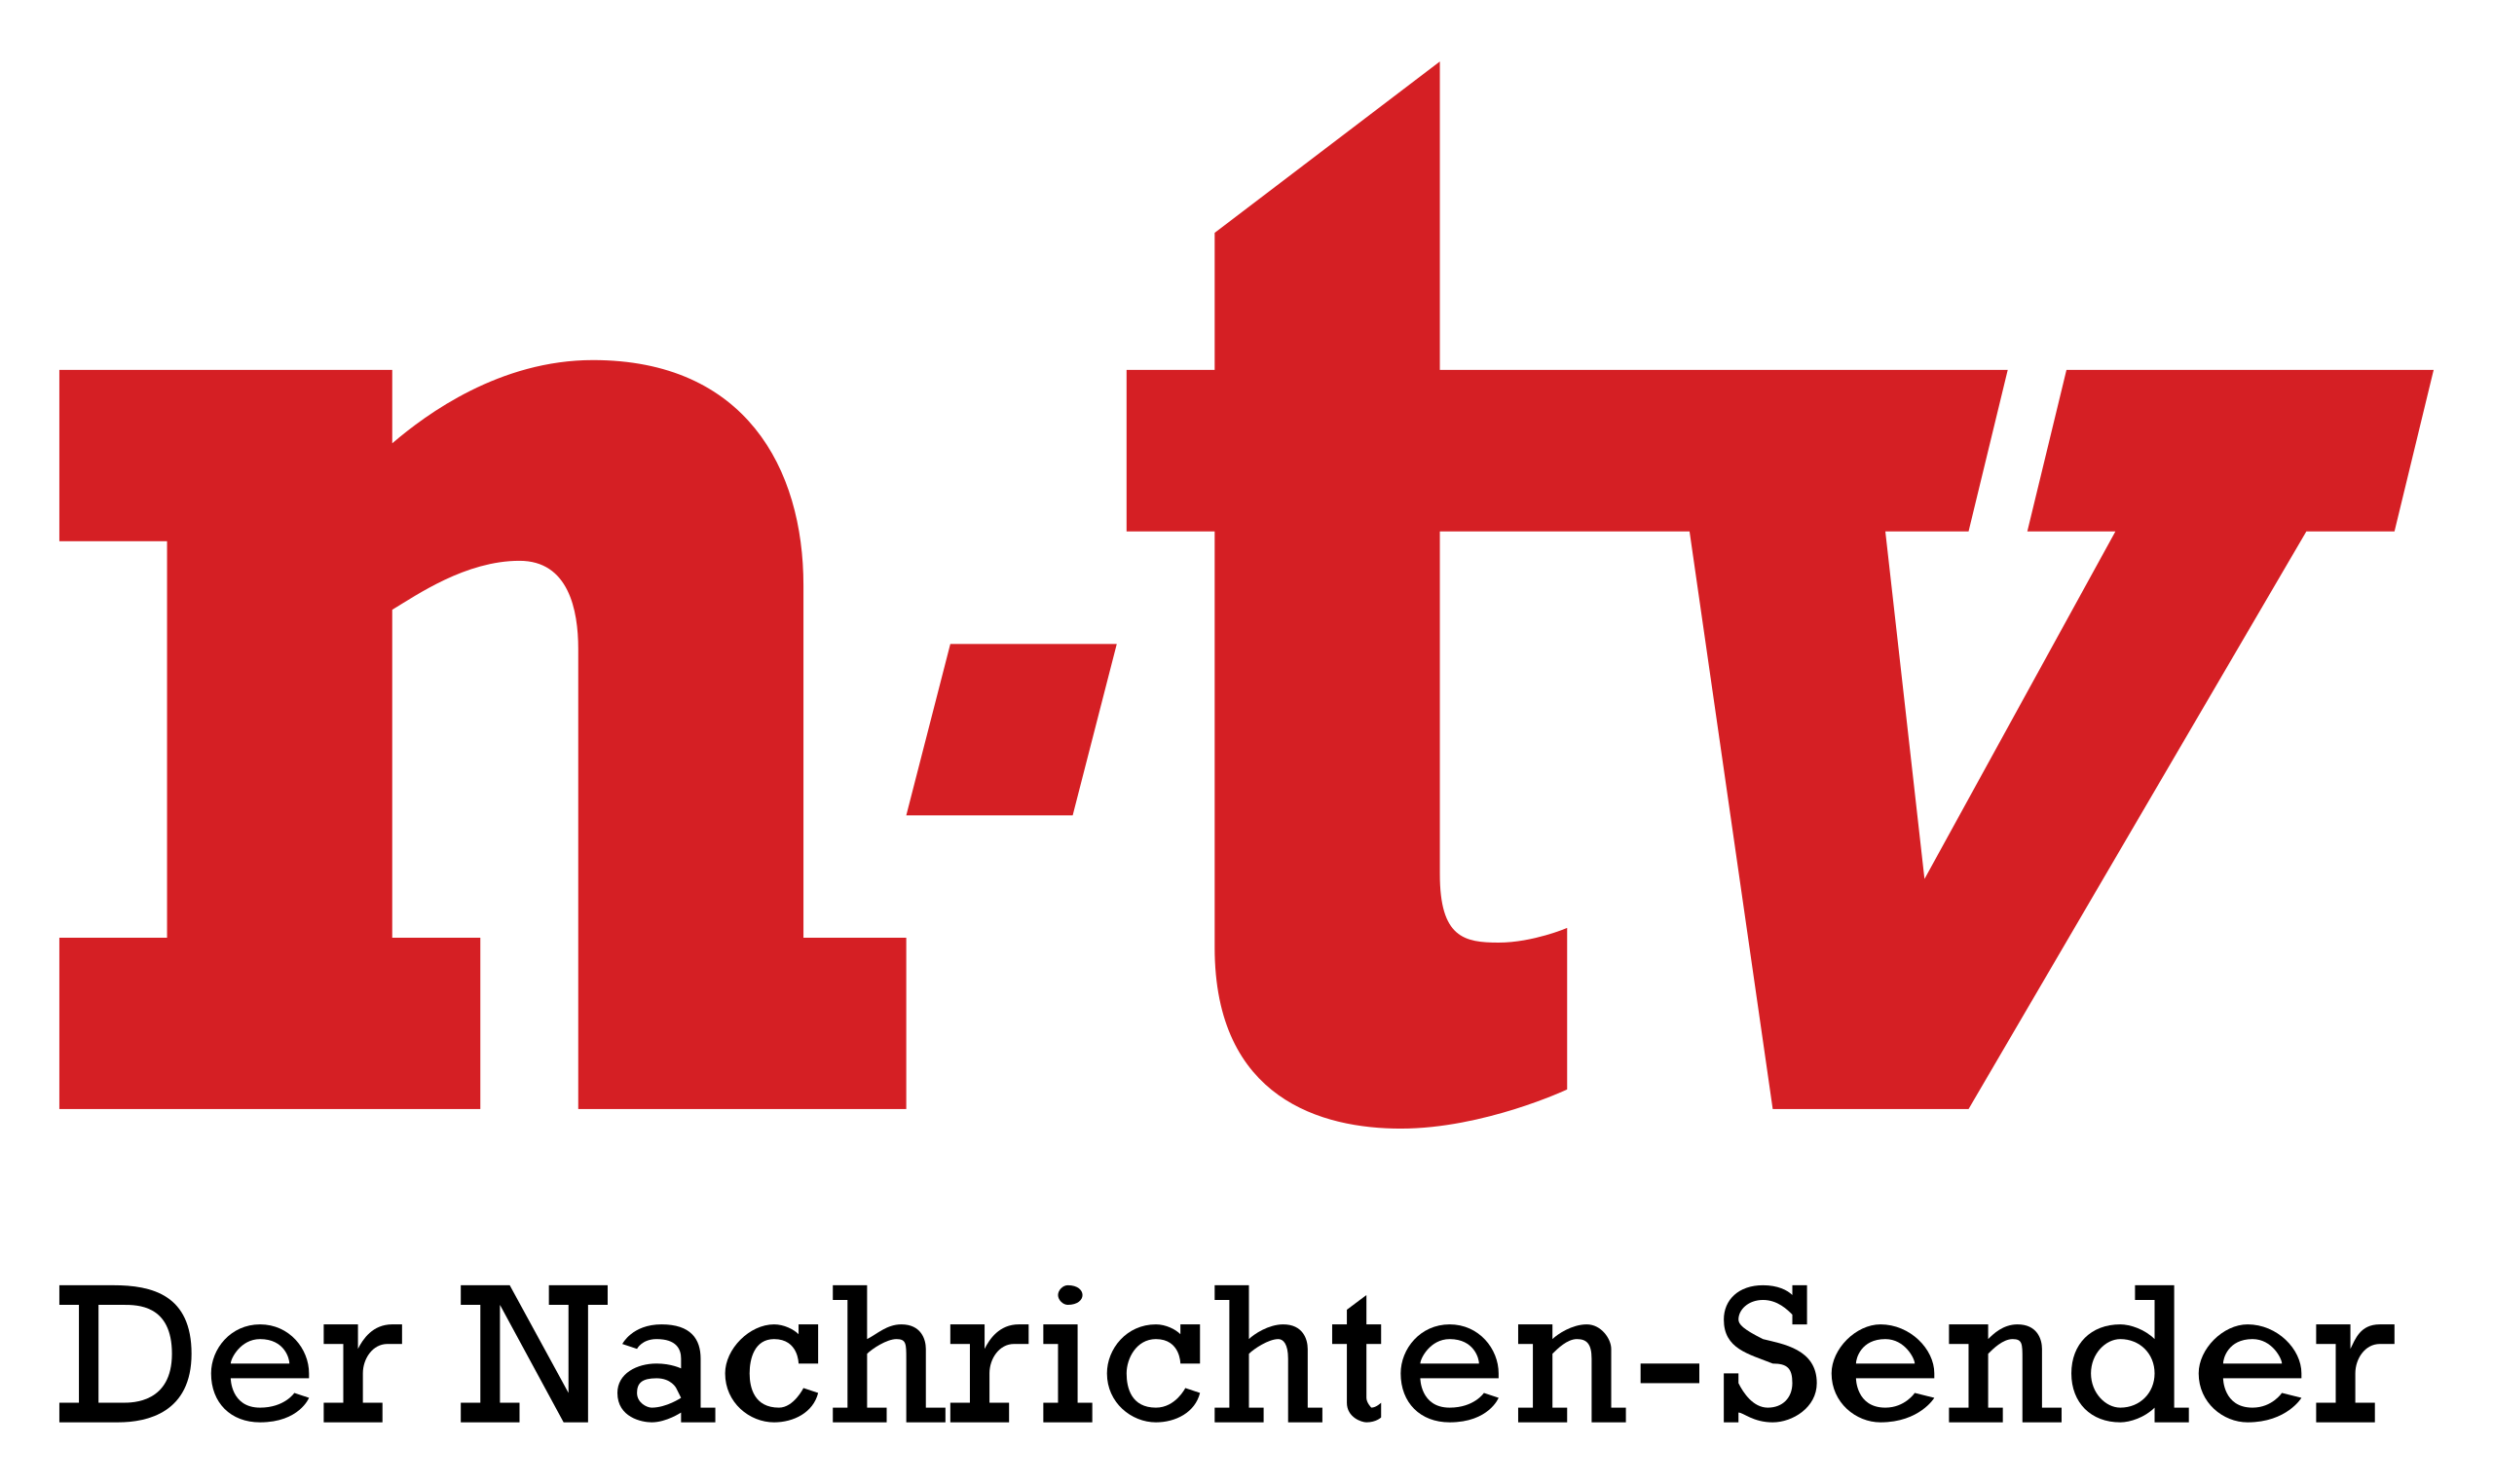 File:VL logo.svg - Wikipedia